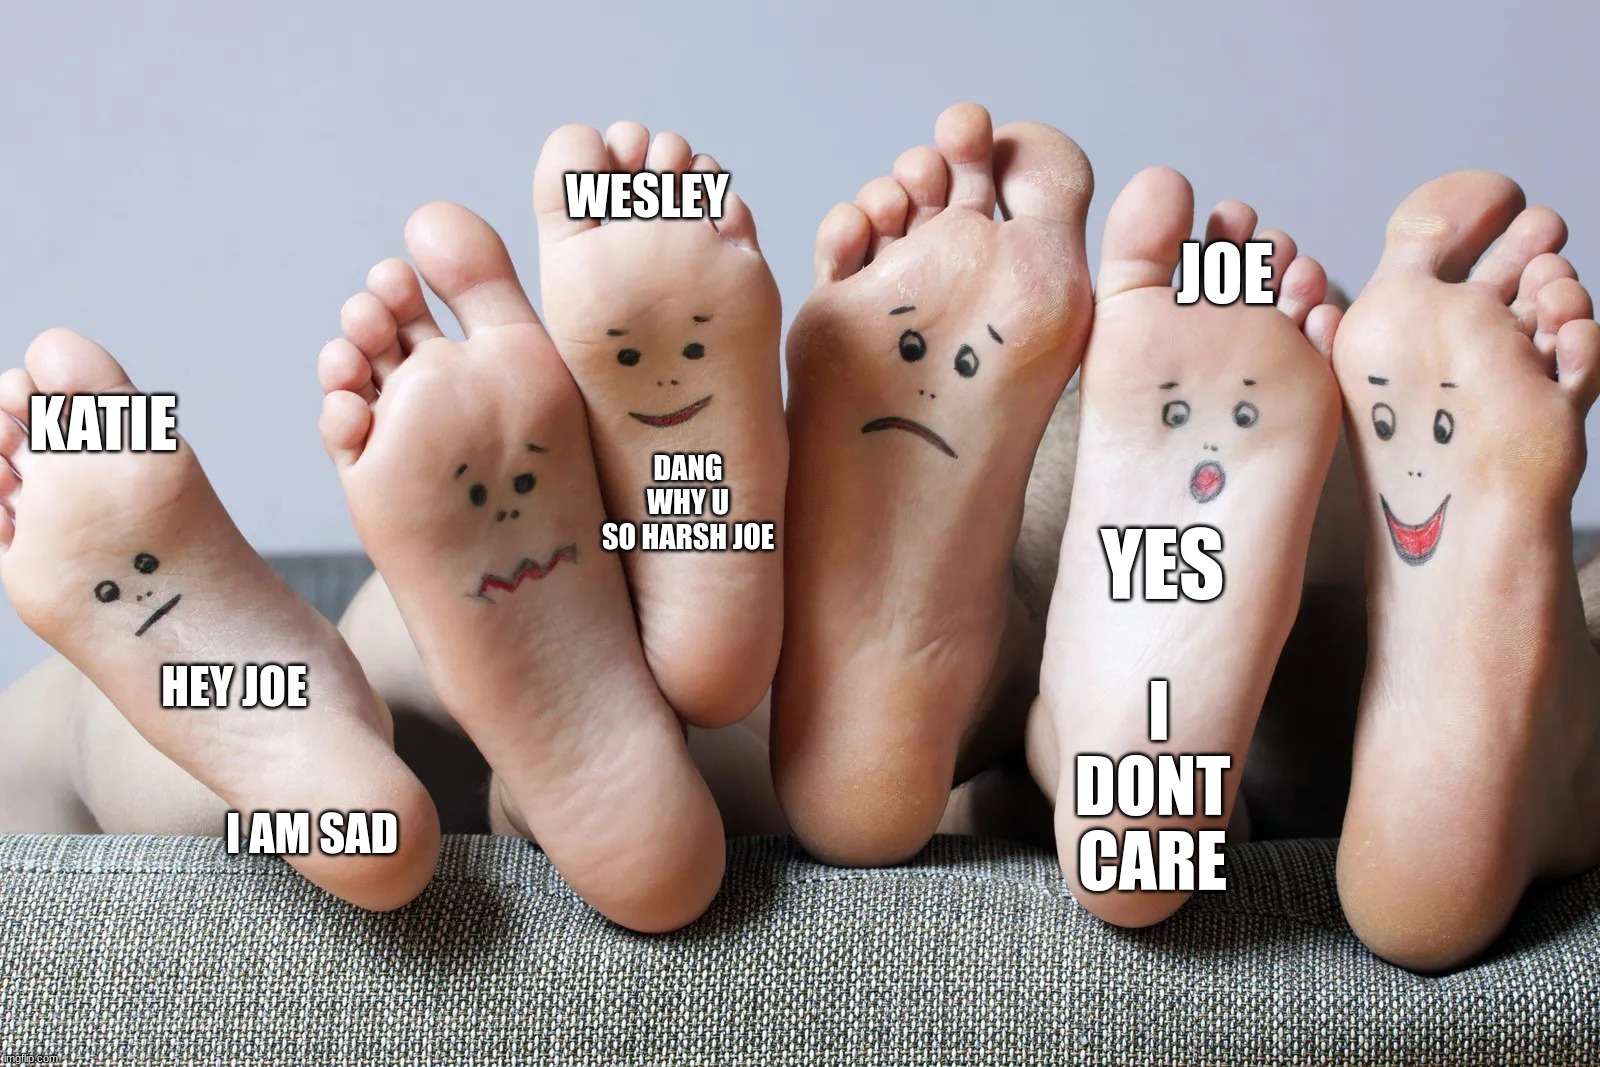 feet talk | WESLEY; JOE; DANG WHY U SO HARSH JOE; KATIE; YES; I DONT CARE; HEY JOE; I AM SAD | image tagged in feet talk | made w/ Imgflip meme maker